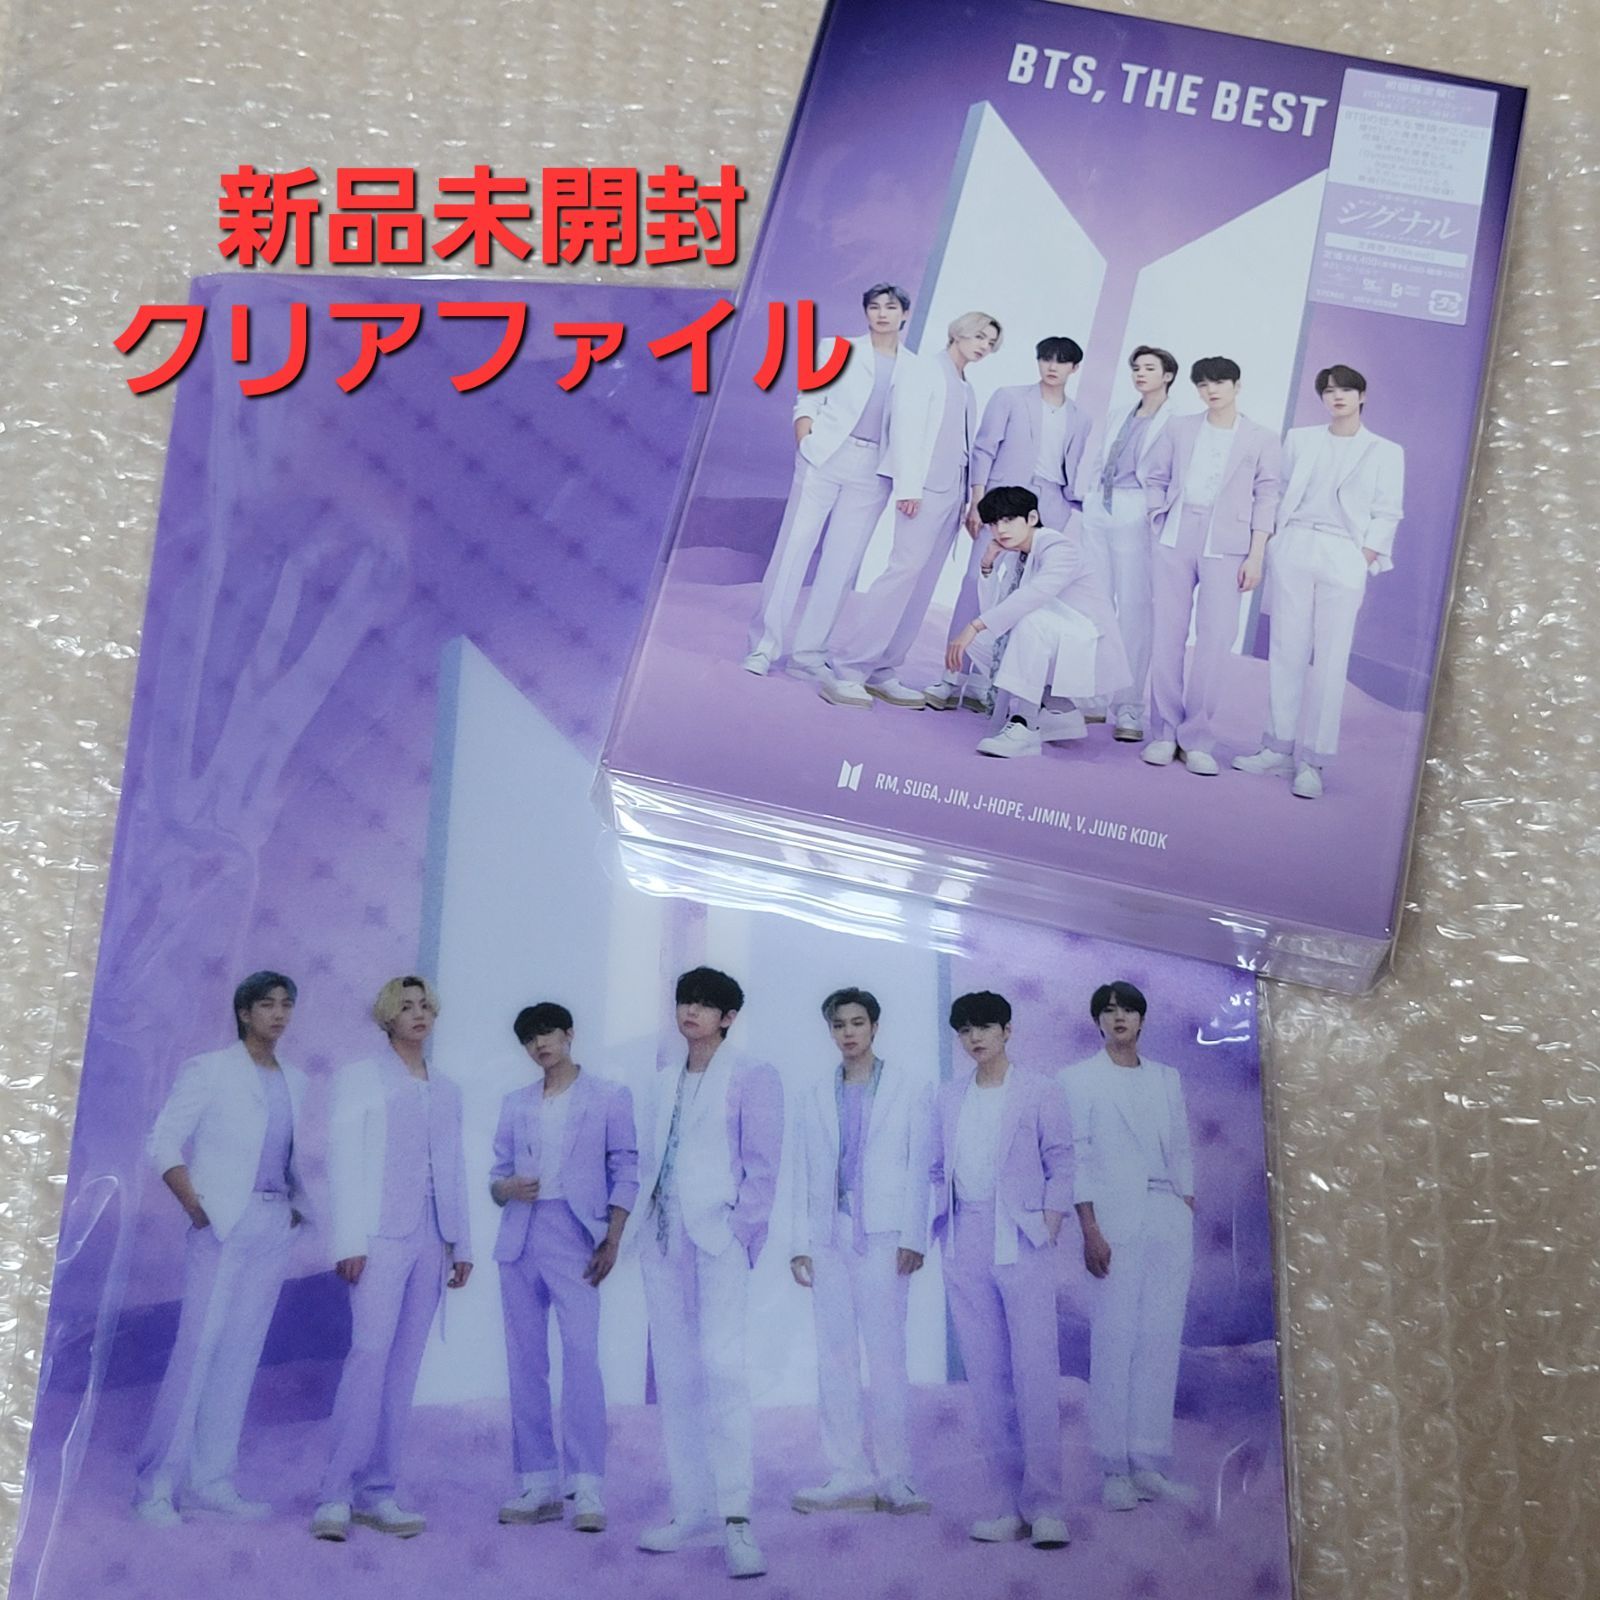 BTS THE BEST wevers 未開封 トレカ クリアファイル - CD・DVD・ブルーレイ